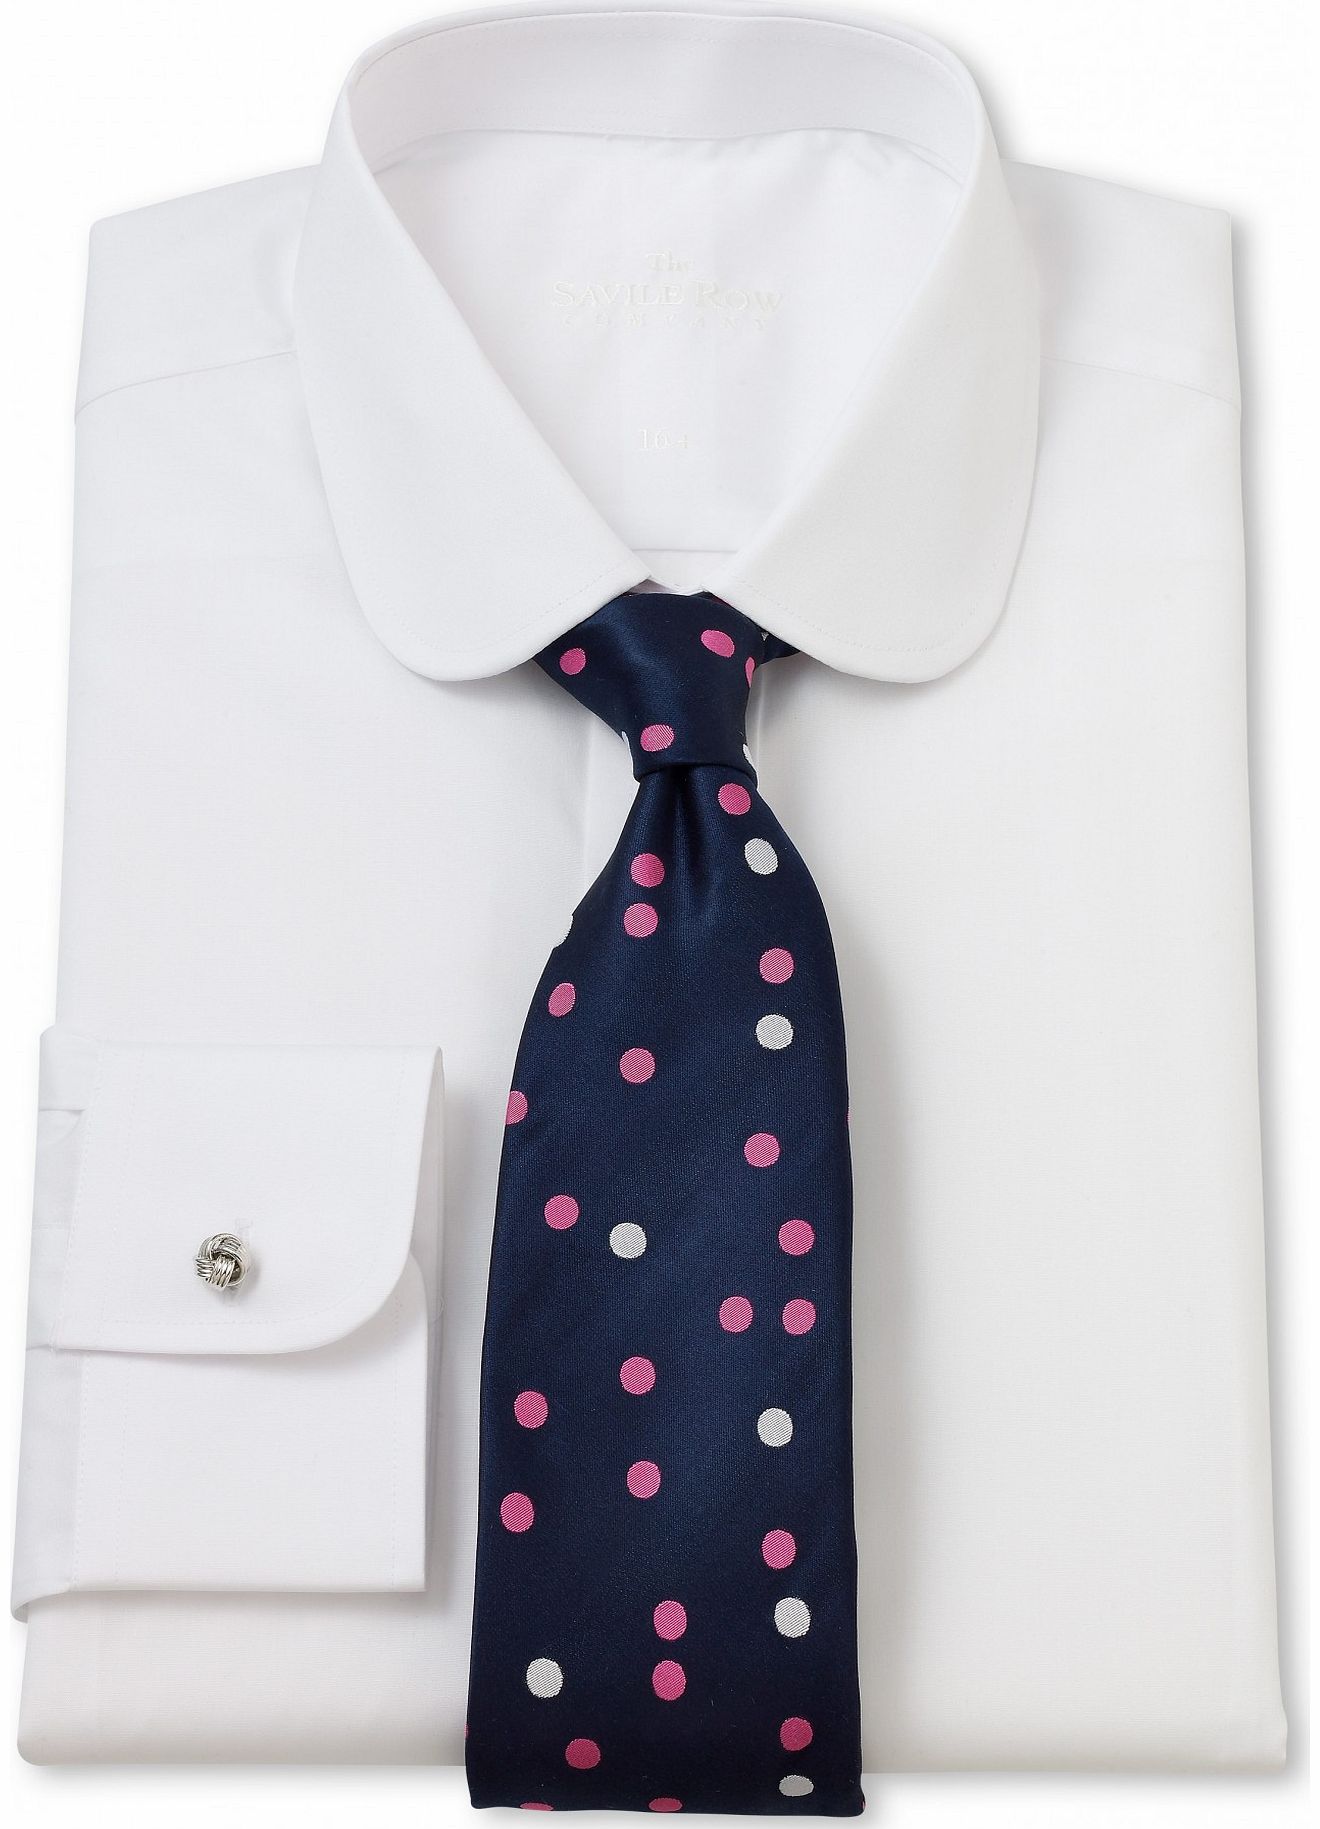 Savile Row Company White Round Collar Slim Fit Shirt 15`` Standard